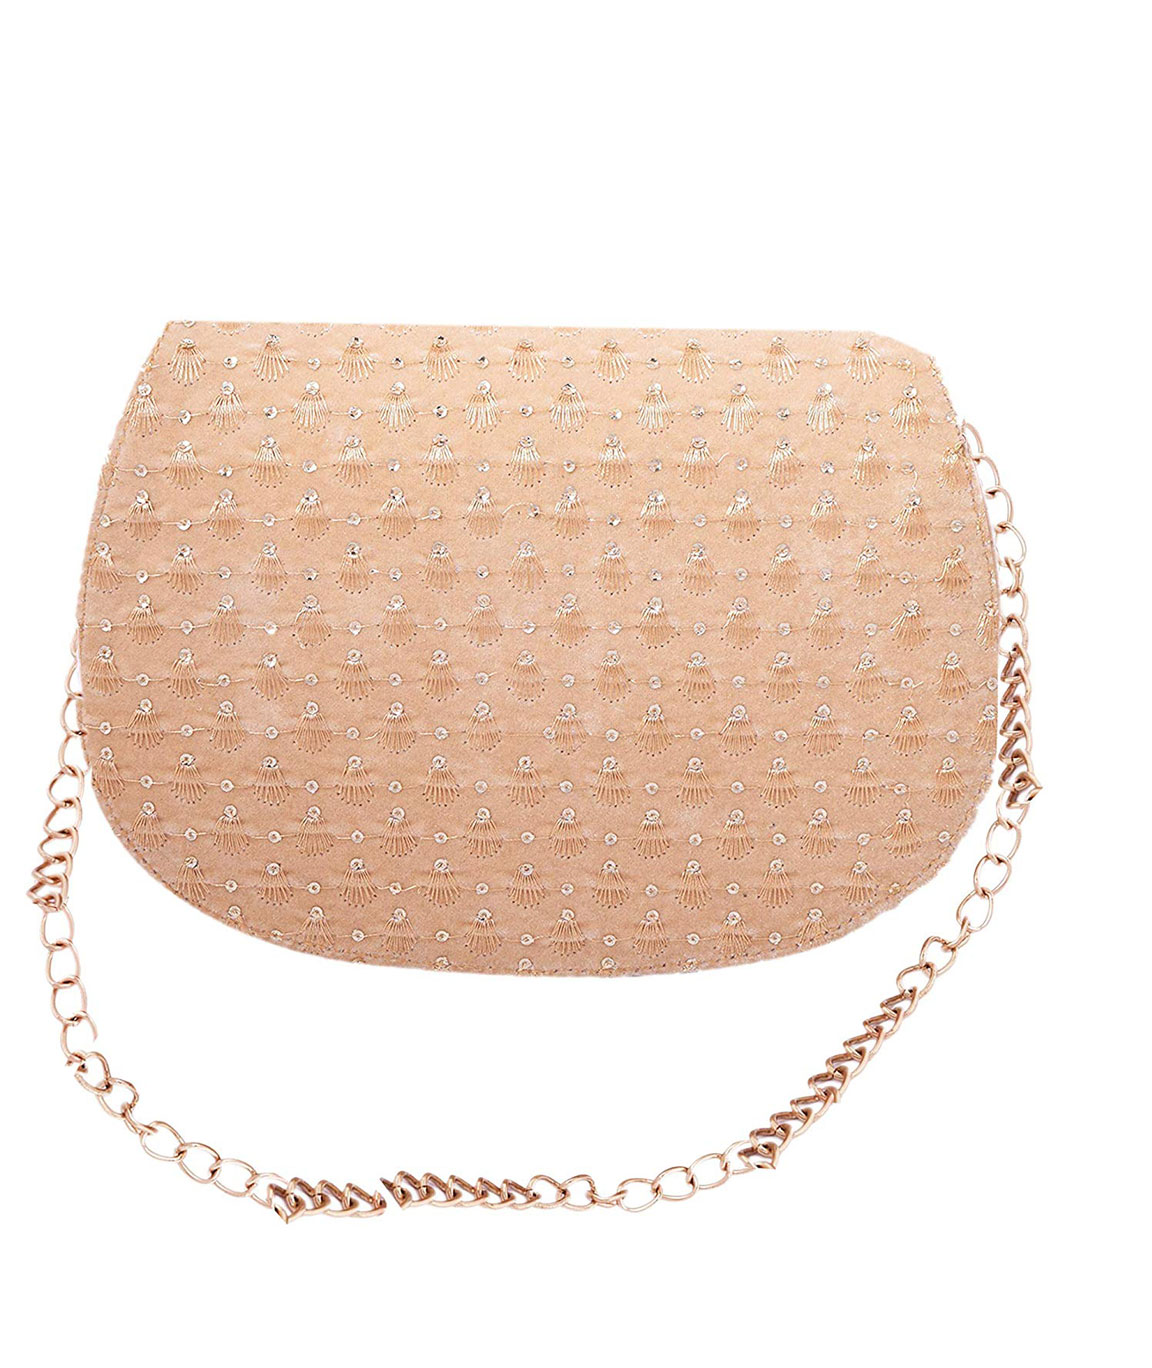 Buy KRYSTAL Women's Style Side Purse for Girls, Handbag Shoulder Belt  Golden Chrome Chain for Hand Carrying Dumpling bag (11 x 6.5 x 2.5 Inches)  White colour at Amazon.in